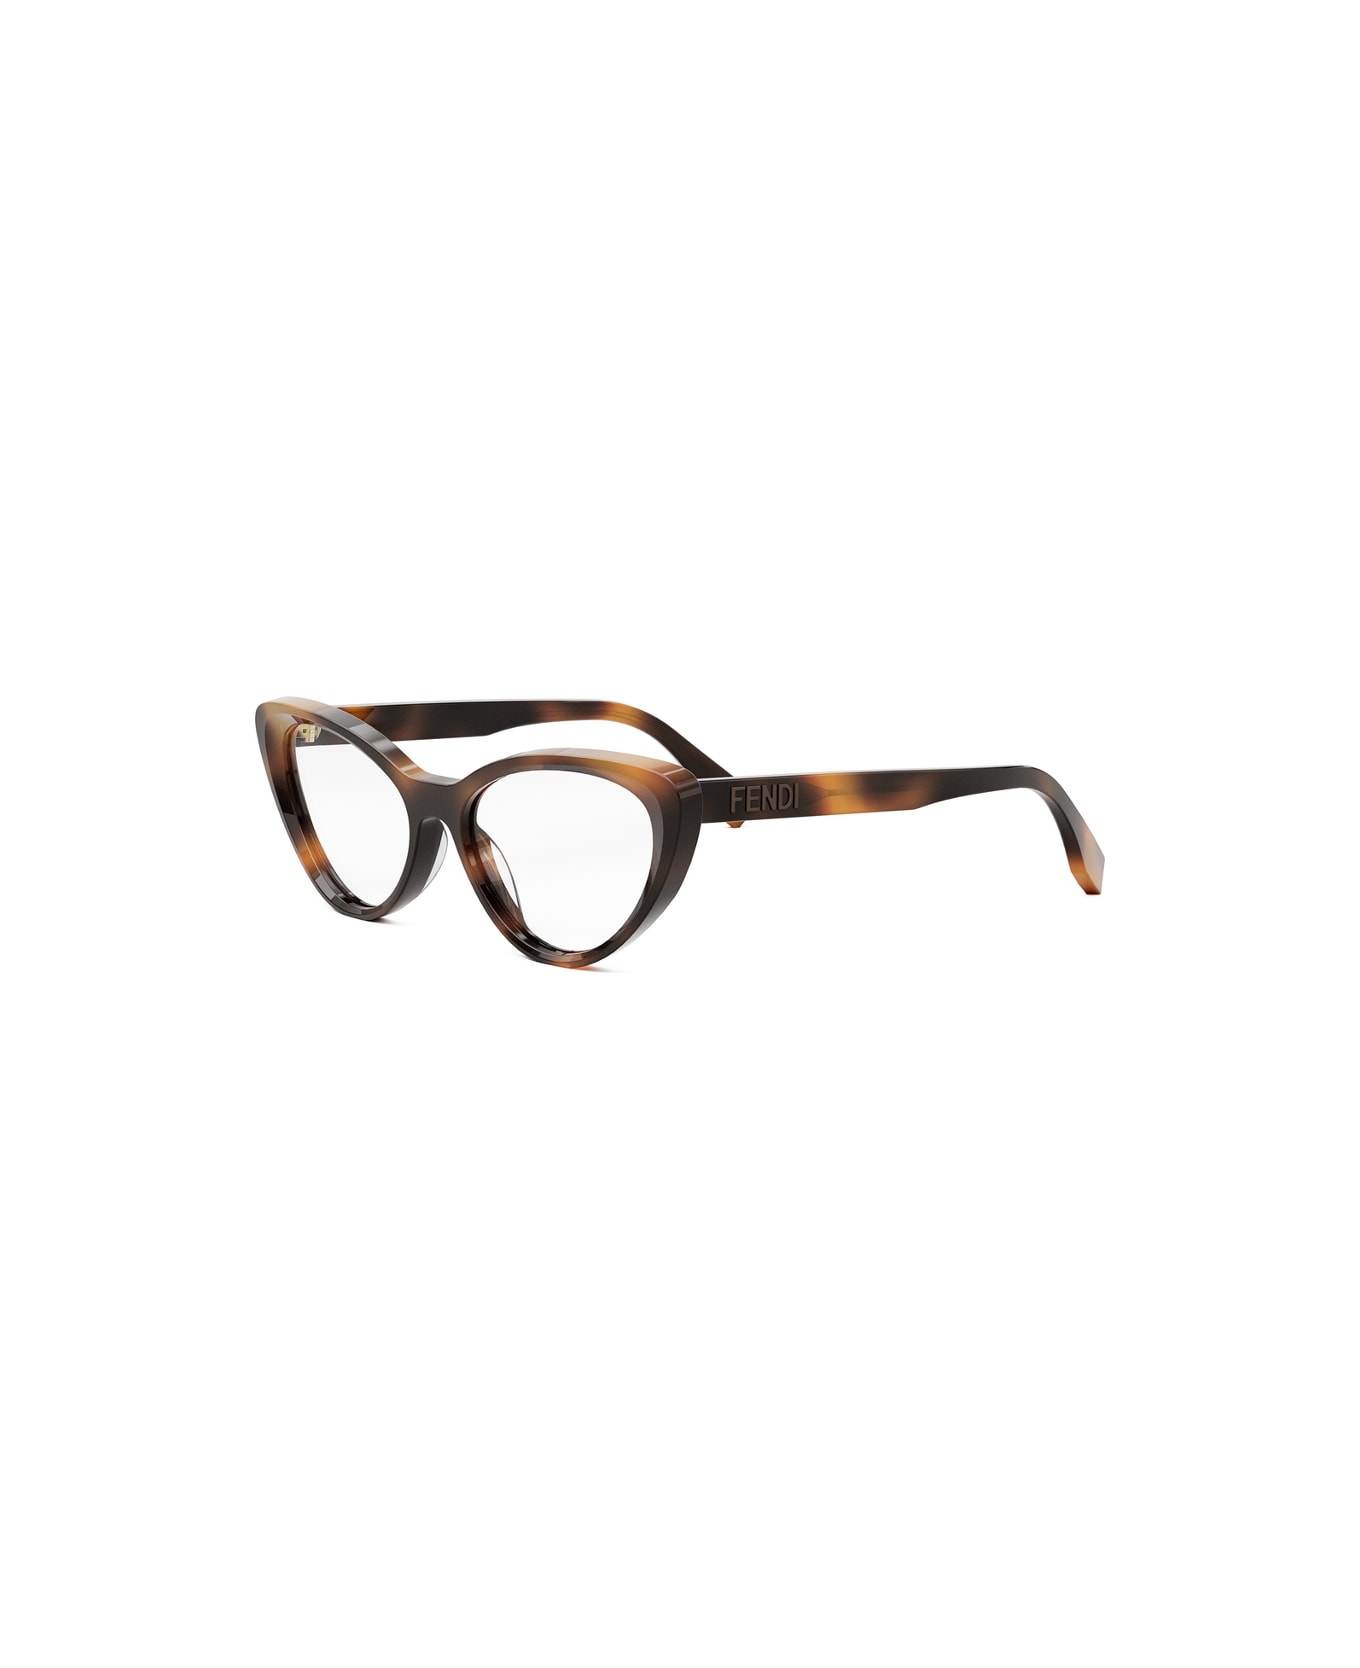 Fendi Eyewear FE50075i 053 Glasses - Tartarugato アイウェア